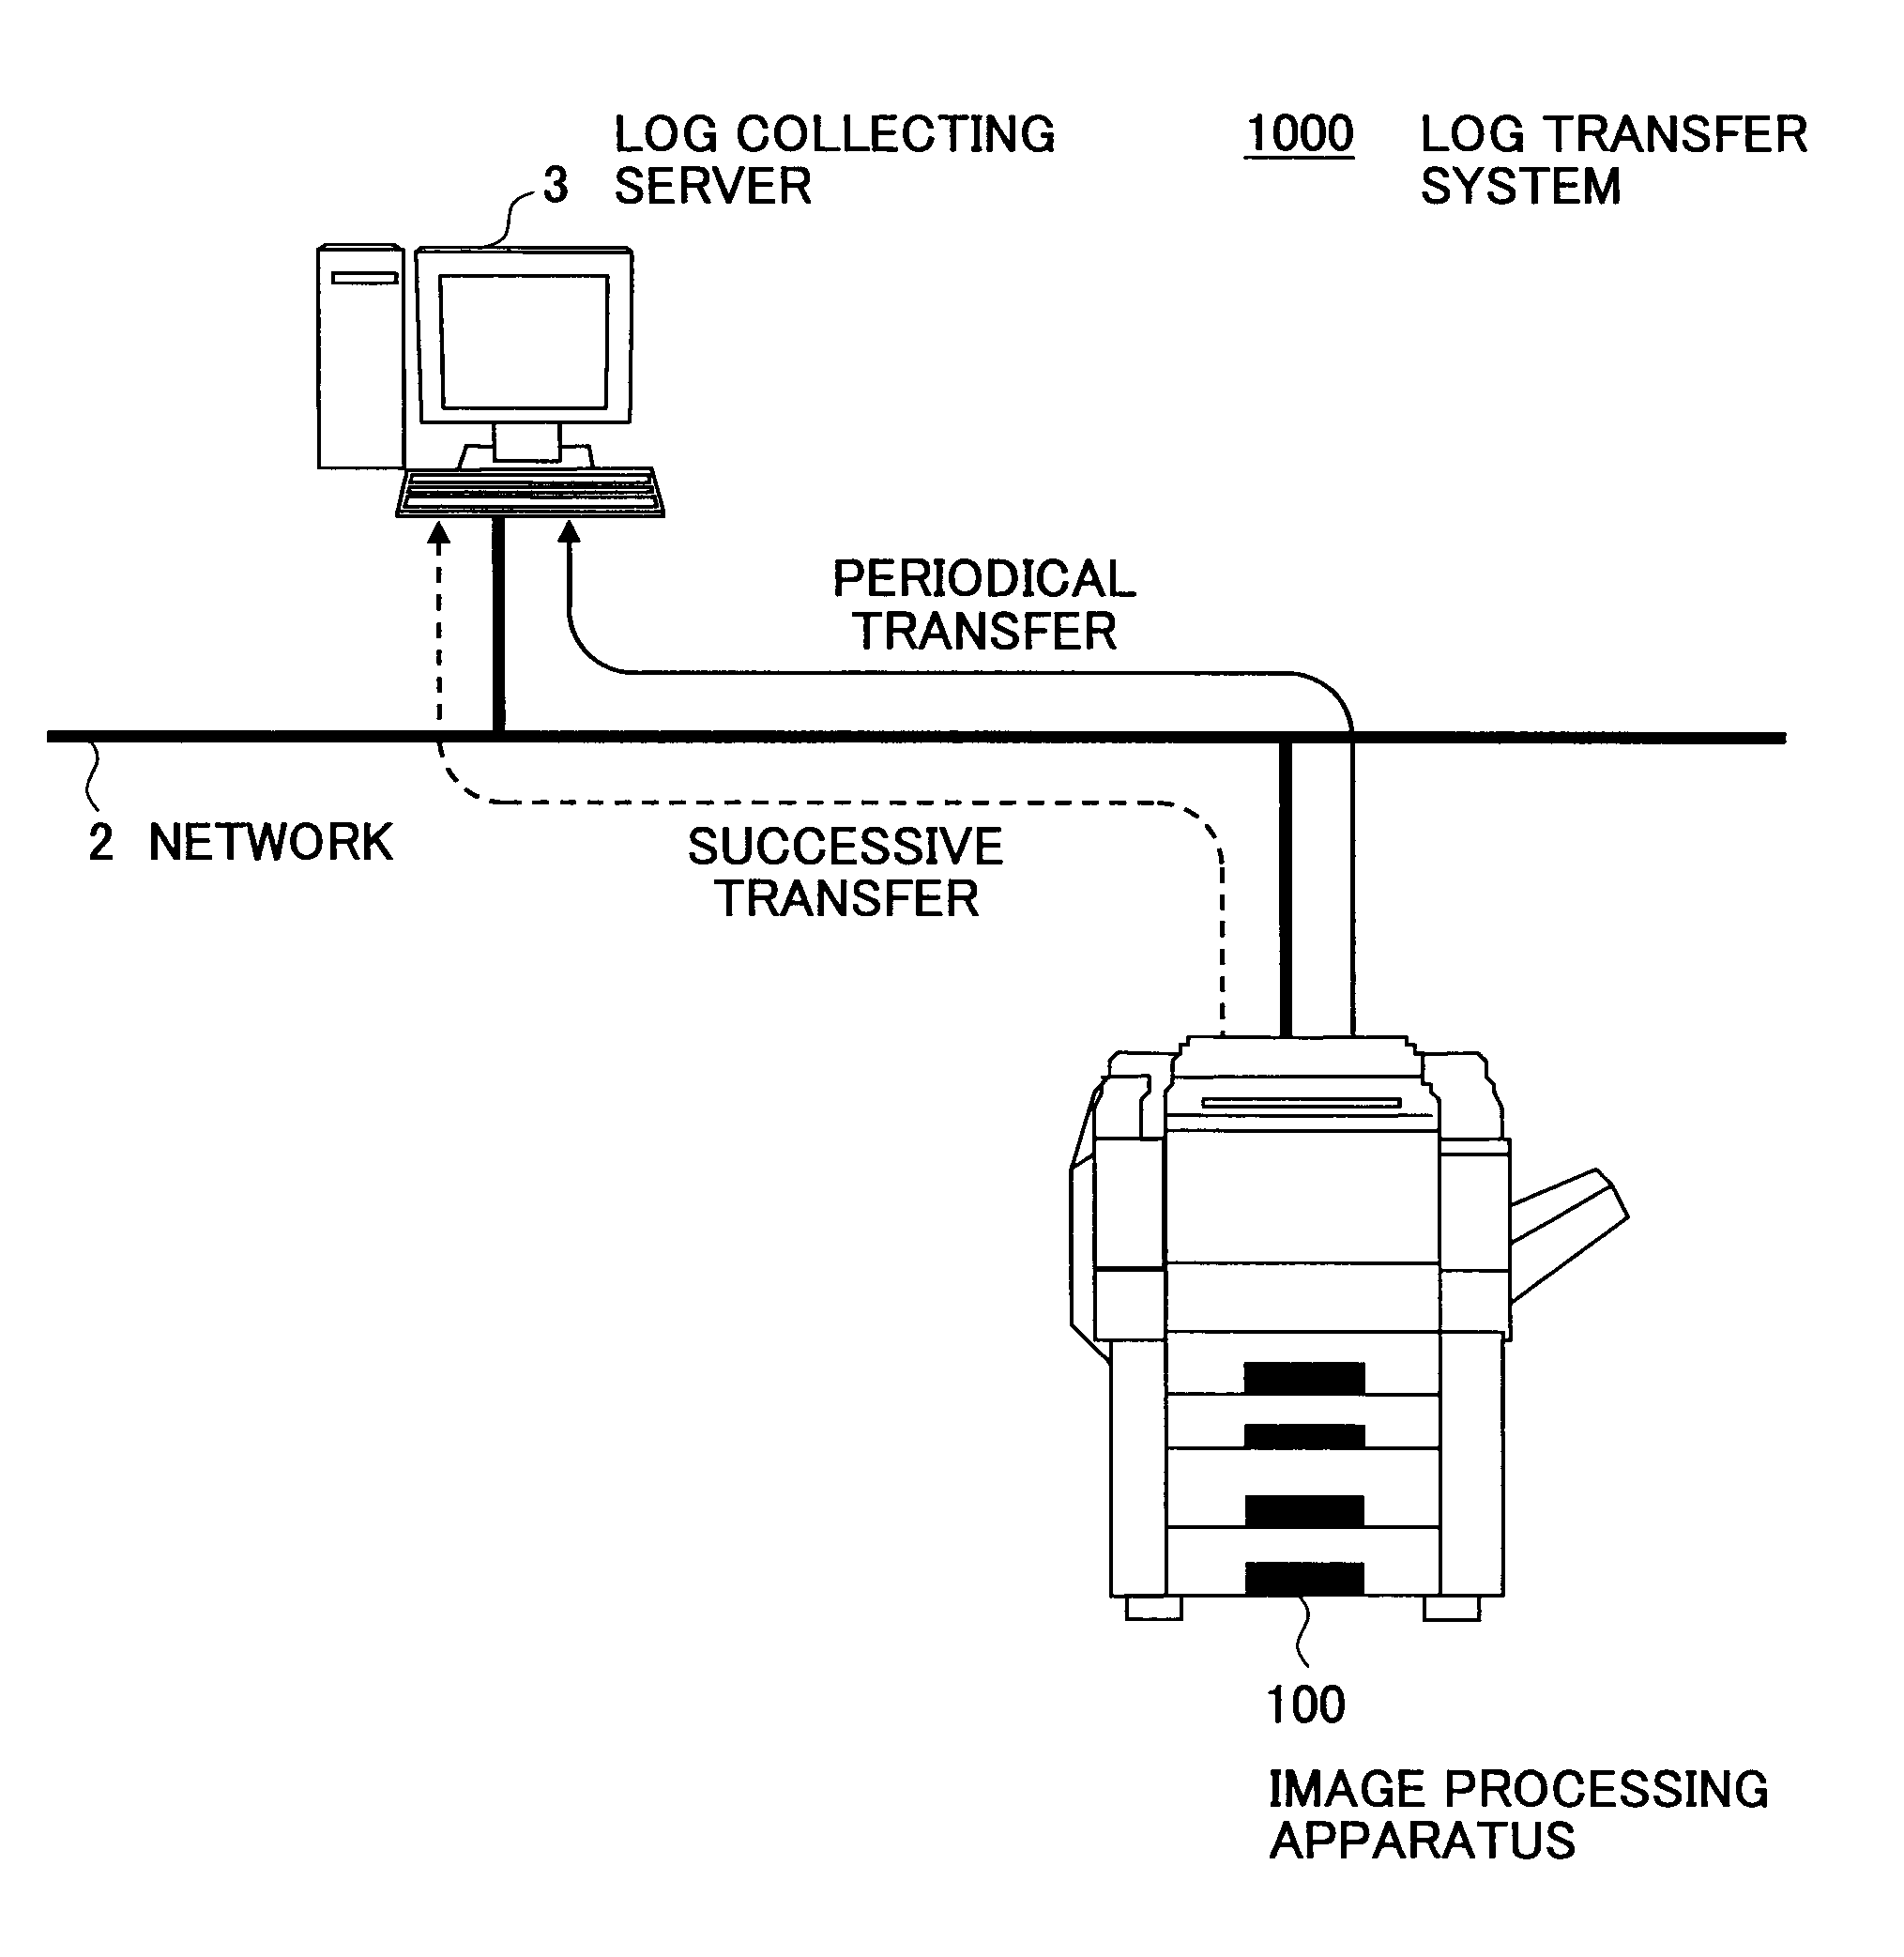 Image processing apparatus and log transfer method